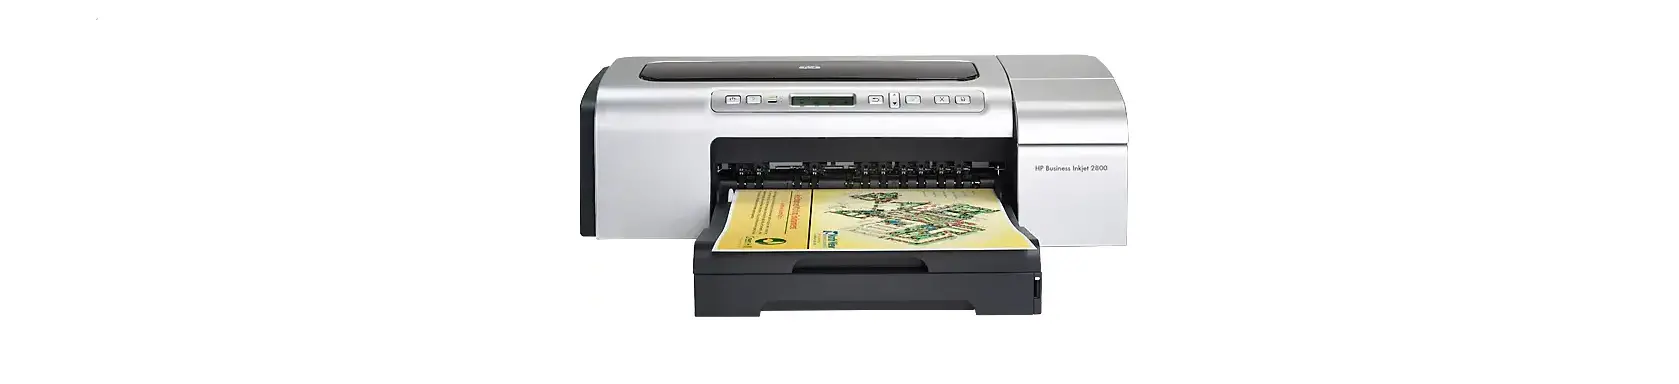 Business Inkjet 2800 Printer series